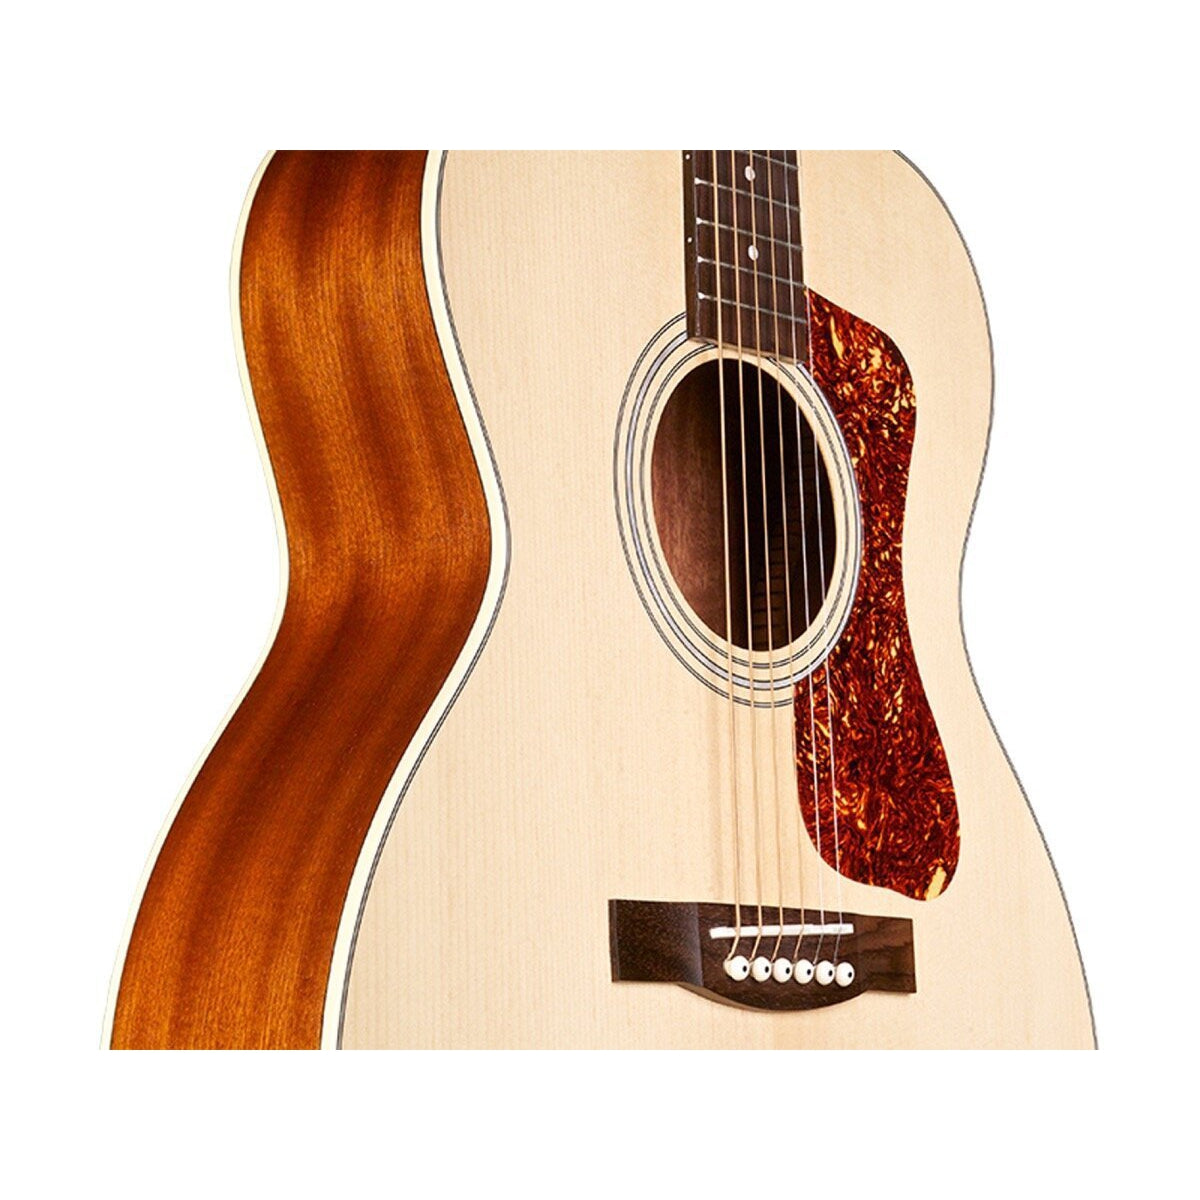 Guild OM-240E Acoustic-Electric Guitar, Natural